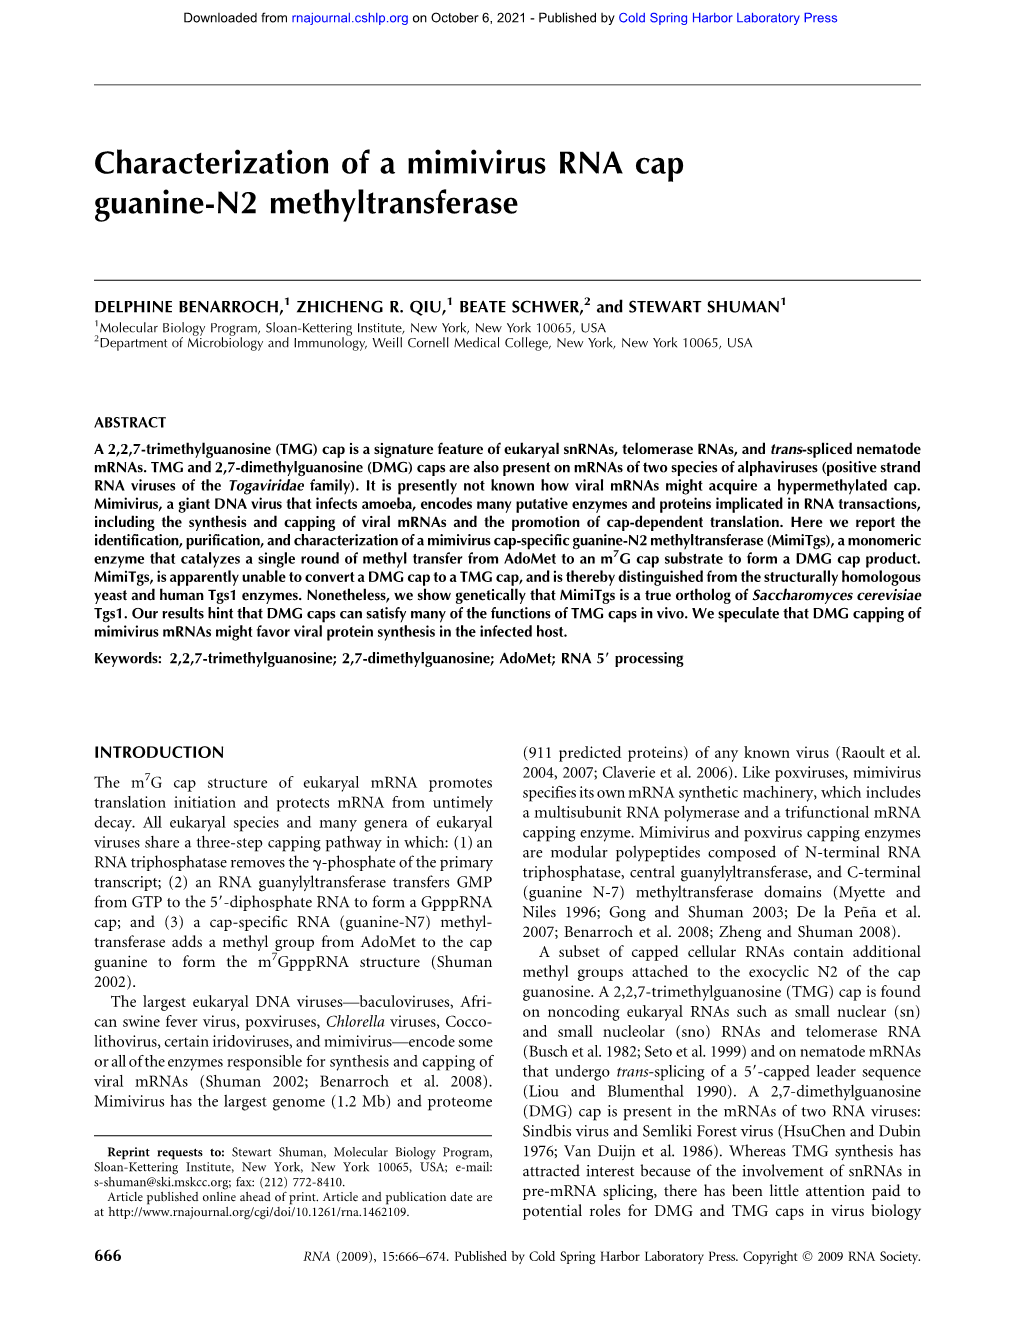 Characterization of a Mimivirus RNA Cap Guanine-N2 Methyltransferase